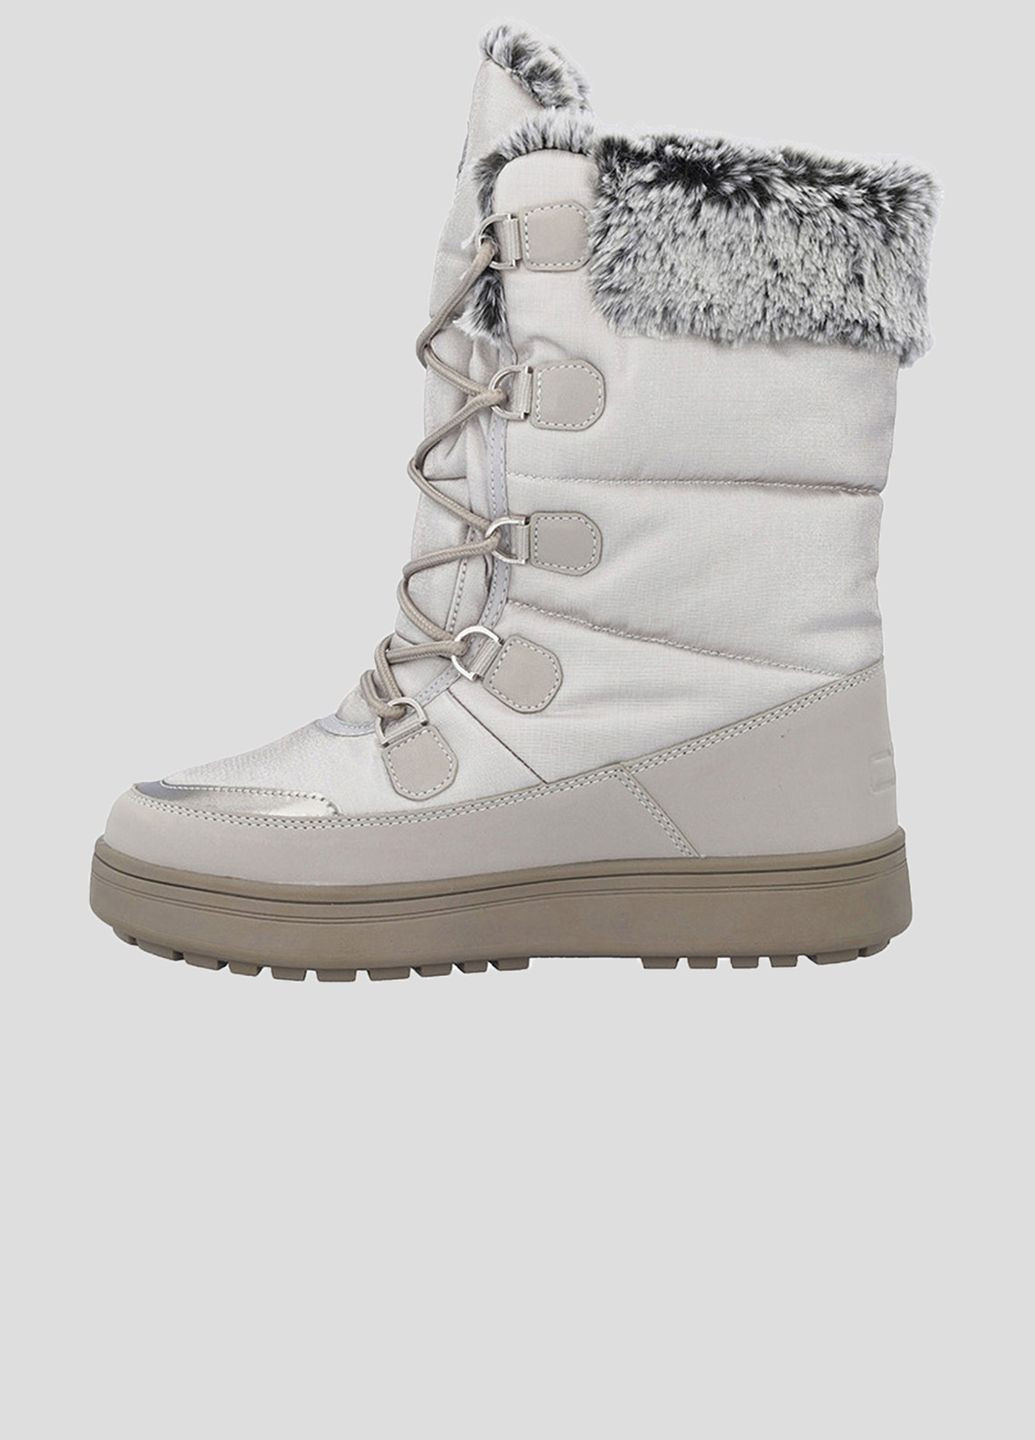 Зимние серые сапоги rohenn wmn snow boots wp на меху CMP